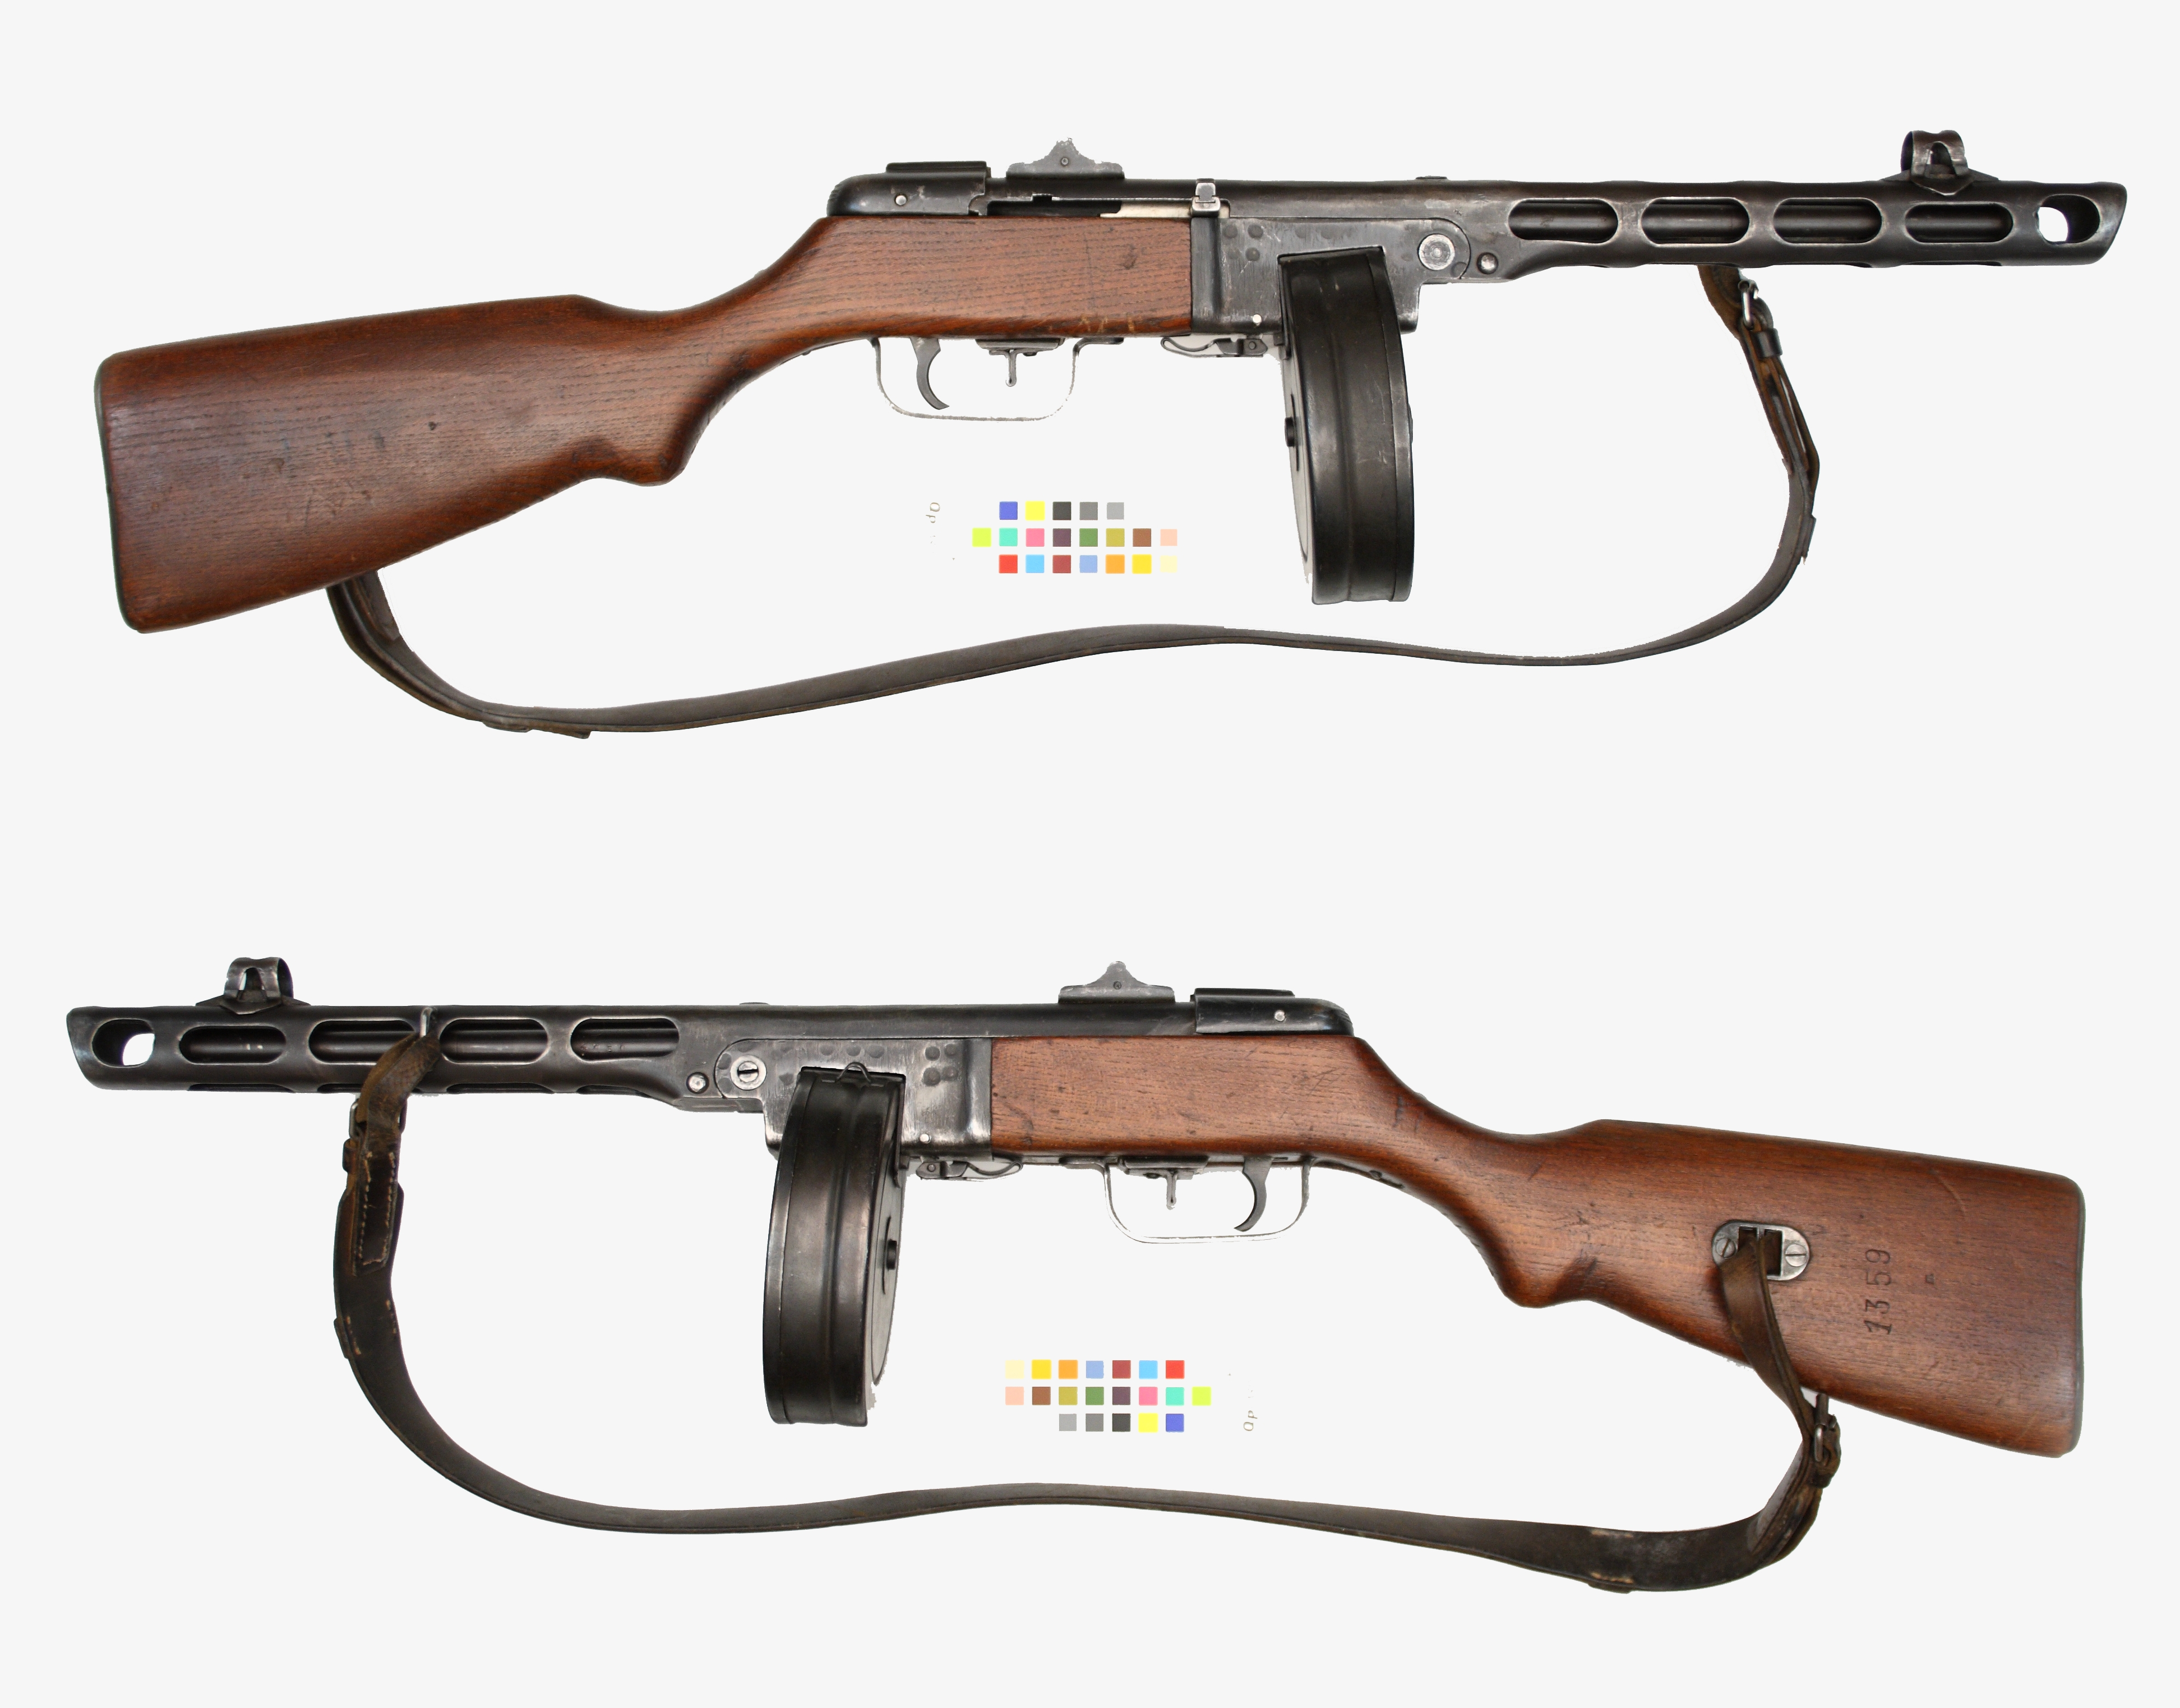 Pistolet-Pulemyot Shpagina obr 1941G (PPSh 41)